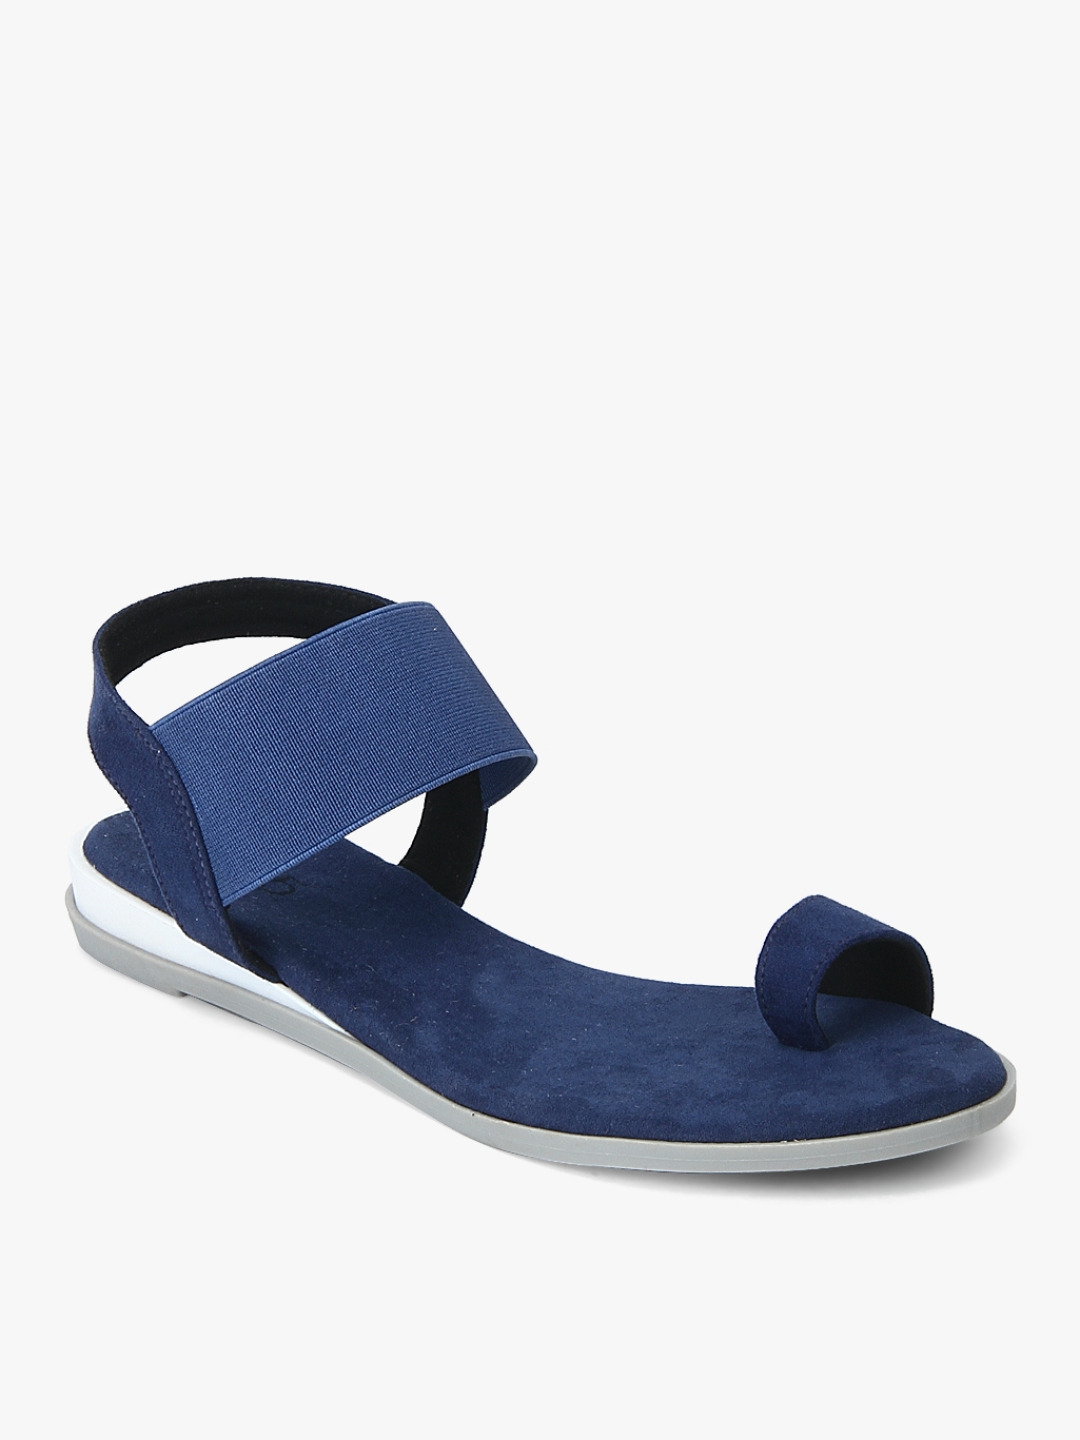 Buy Navy Blue Sandals - Flats for Women 7682006 | Myntra